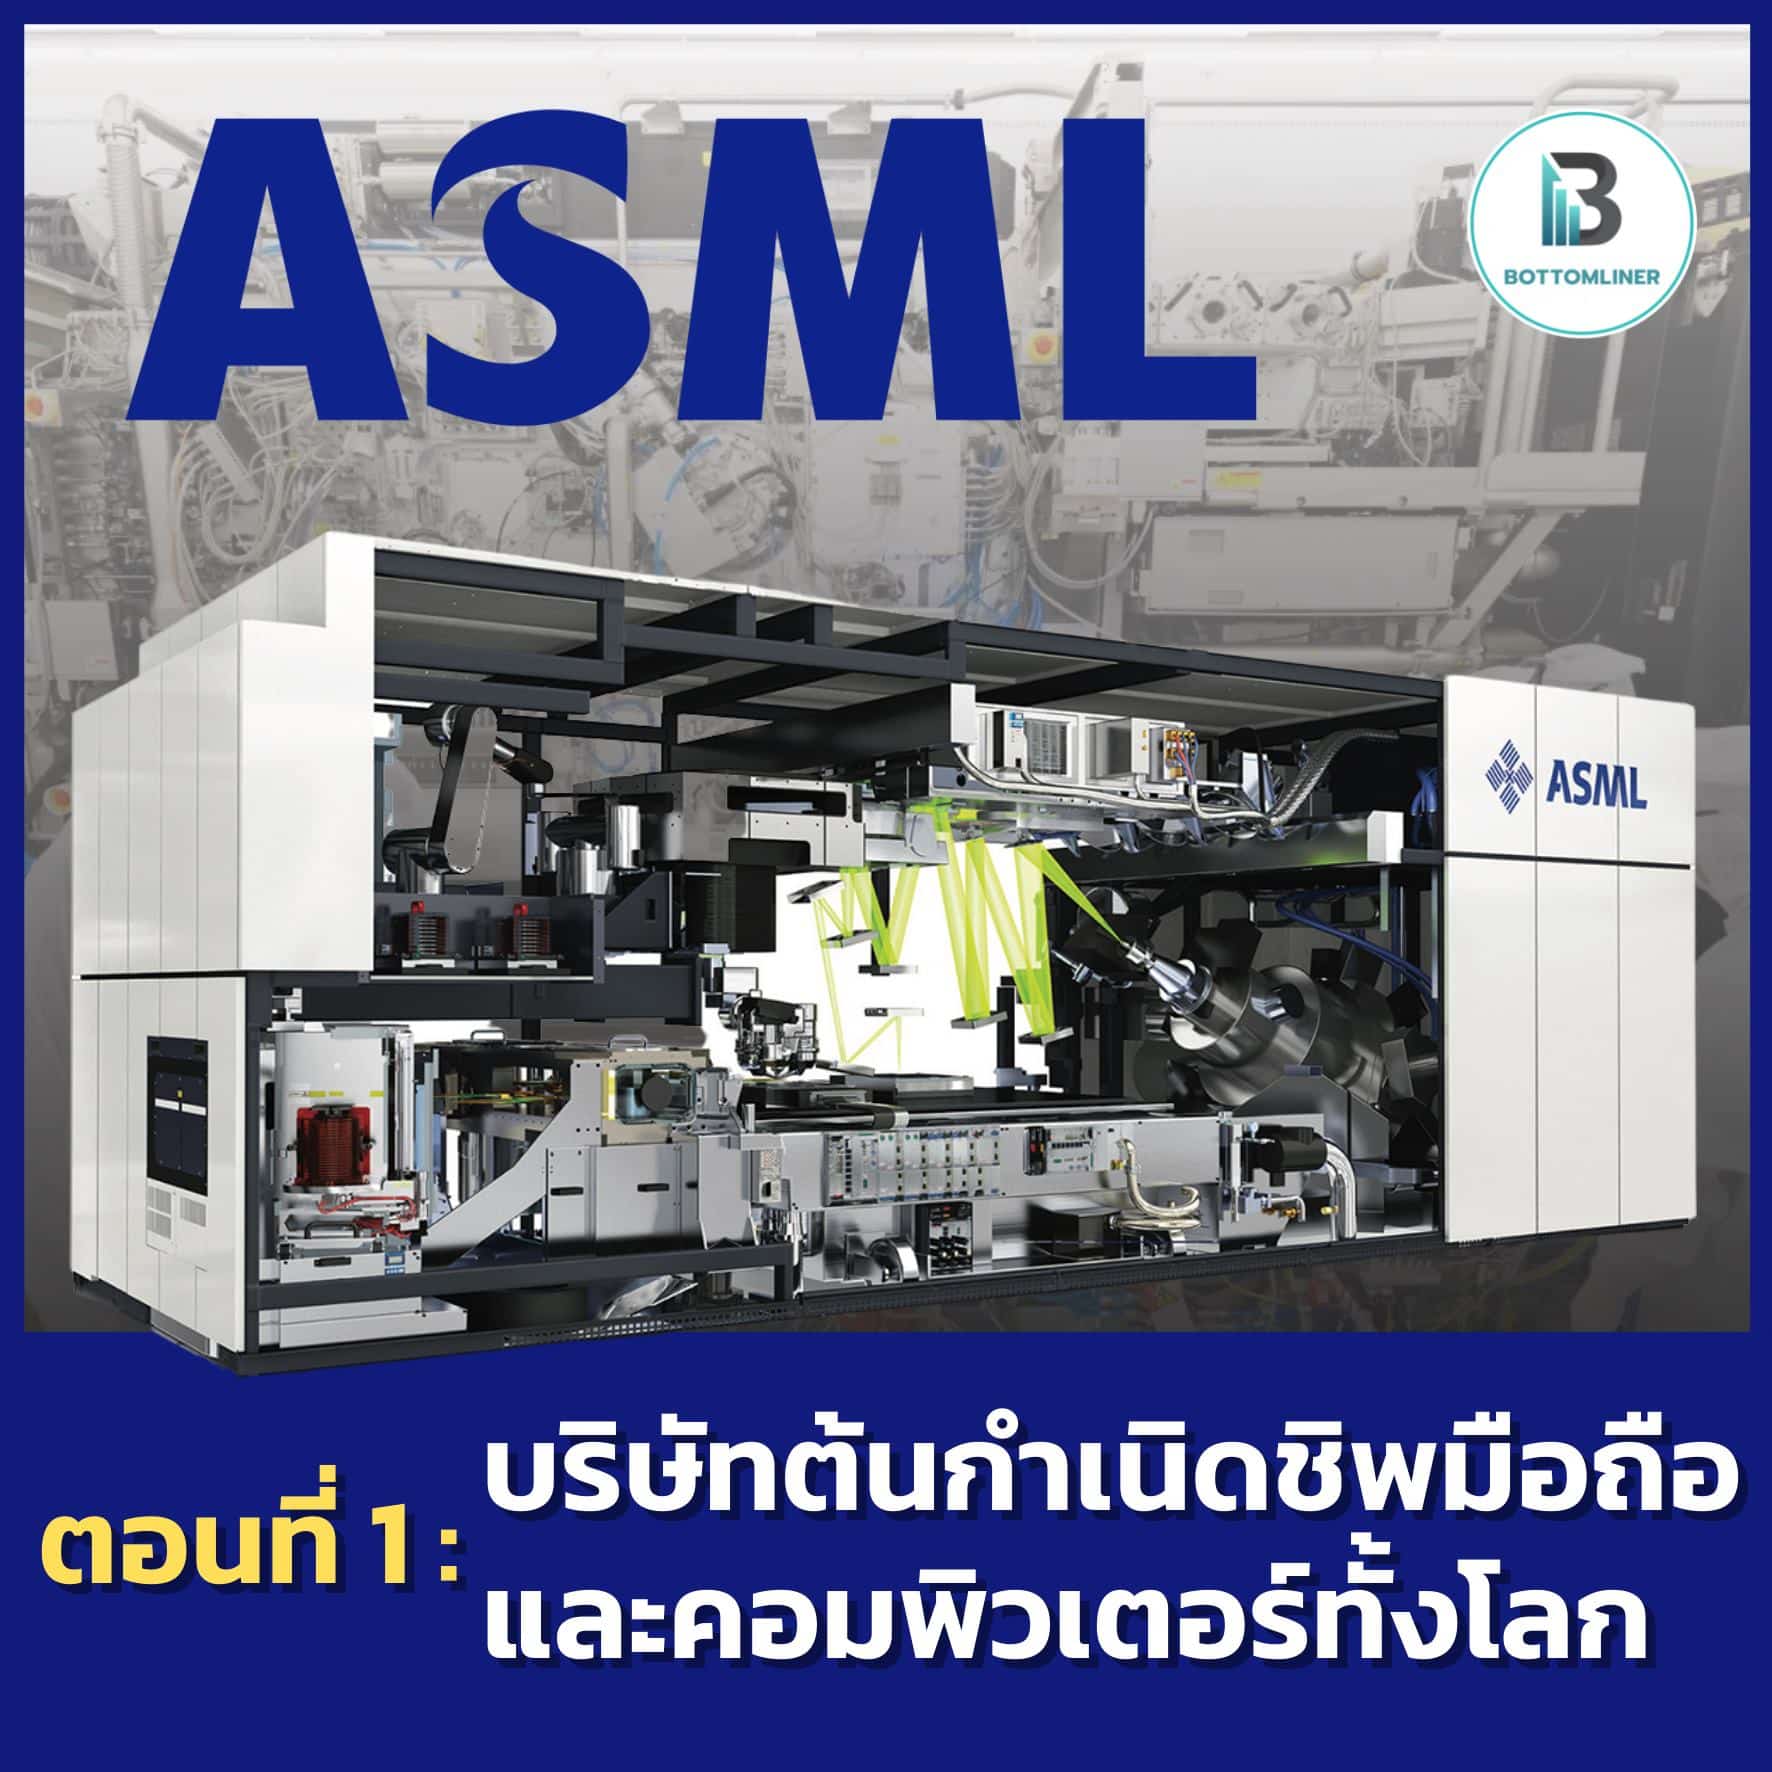 Semiconductor the Series 3 ทหารเสือแห่งวงการเครื่องจักร EP.1 : ASML